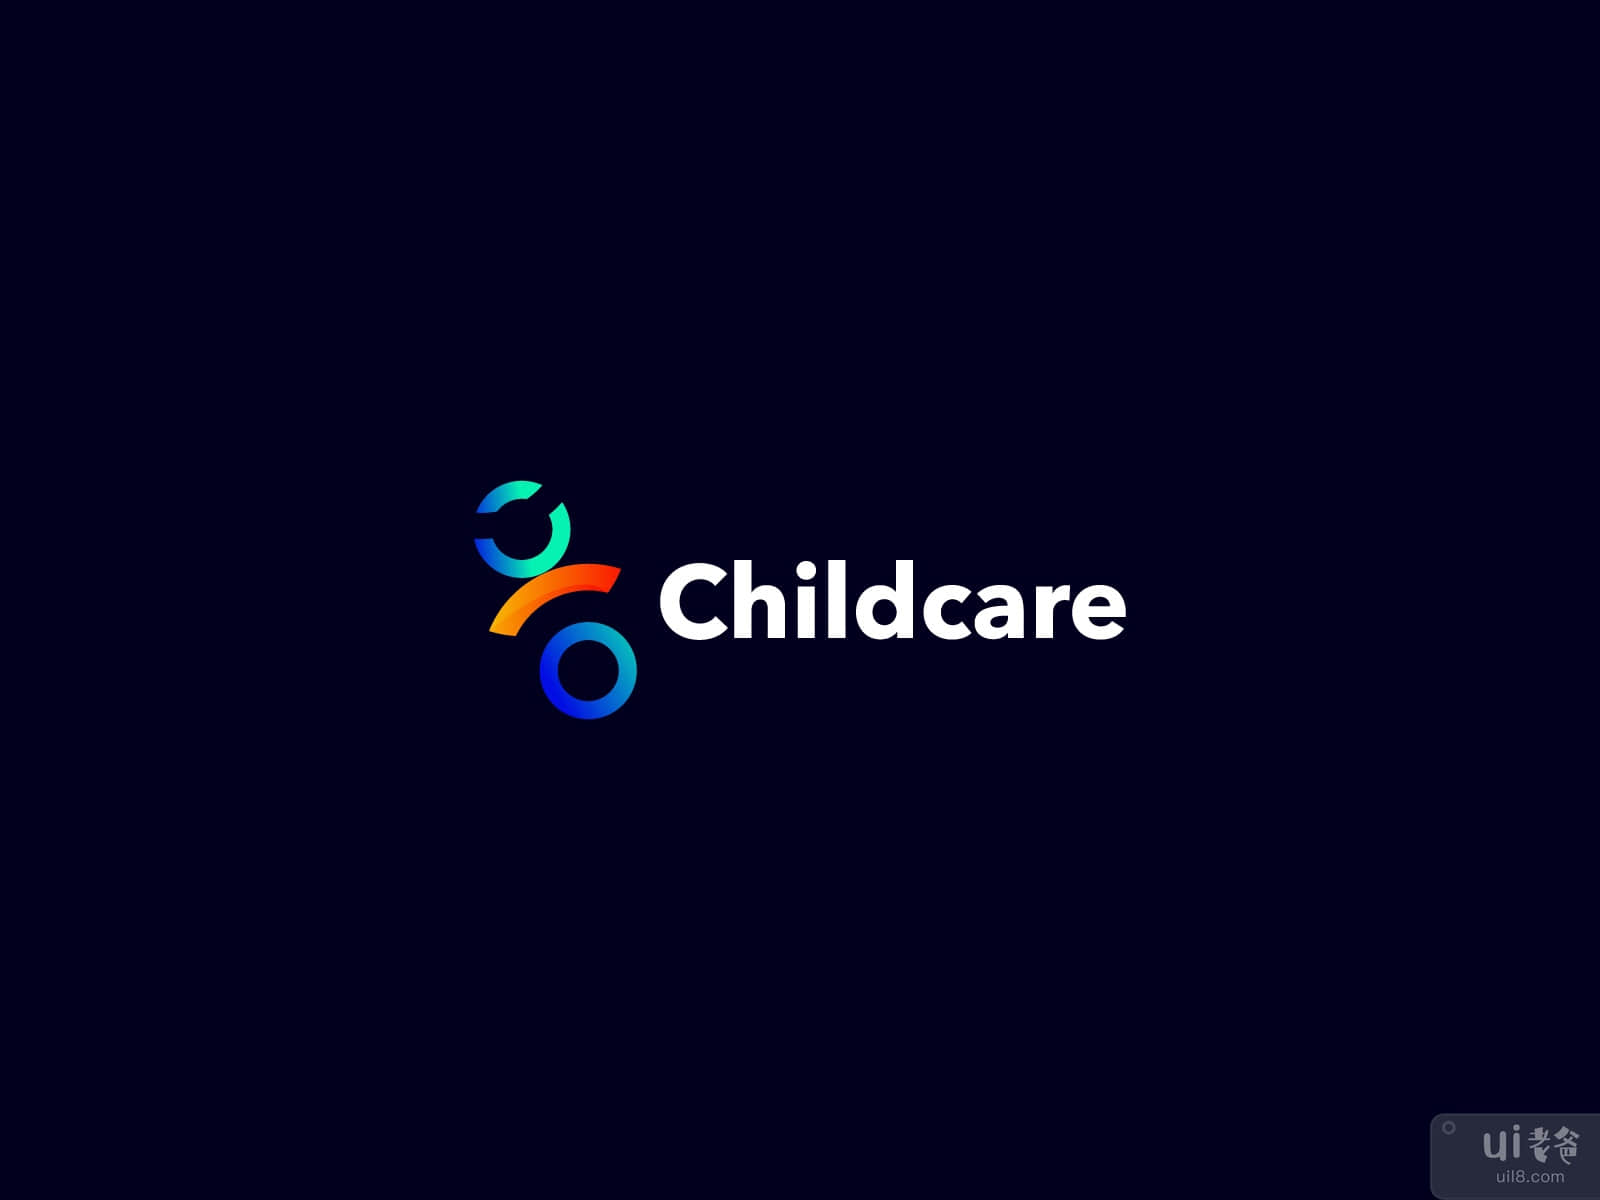 Childcare Foundation Logo Design - Modern Logo